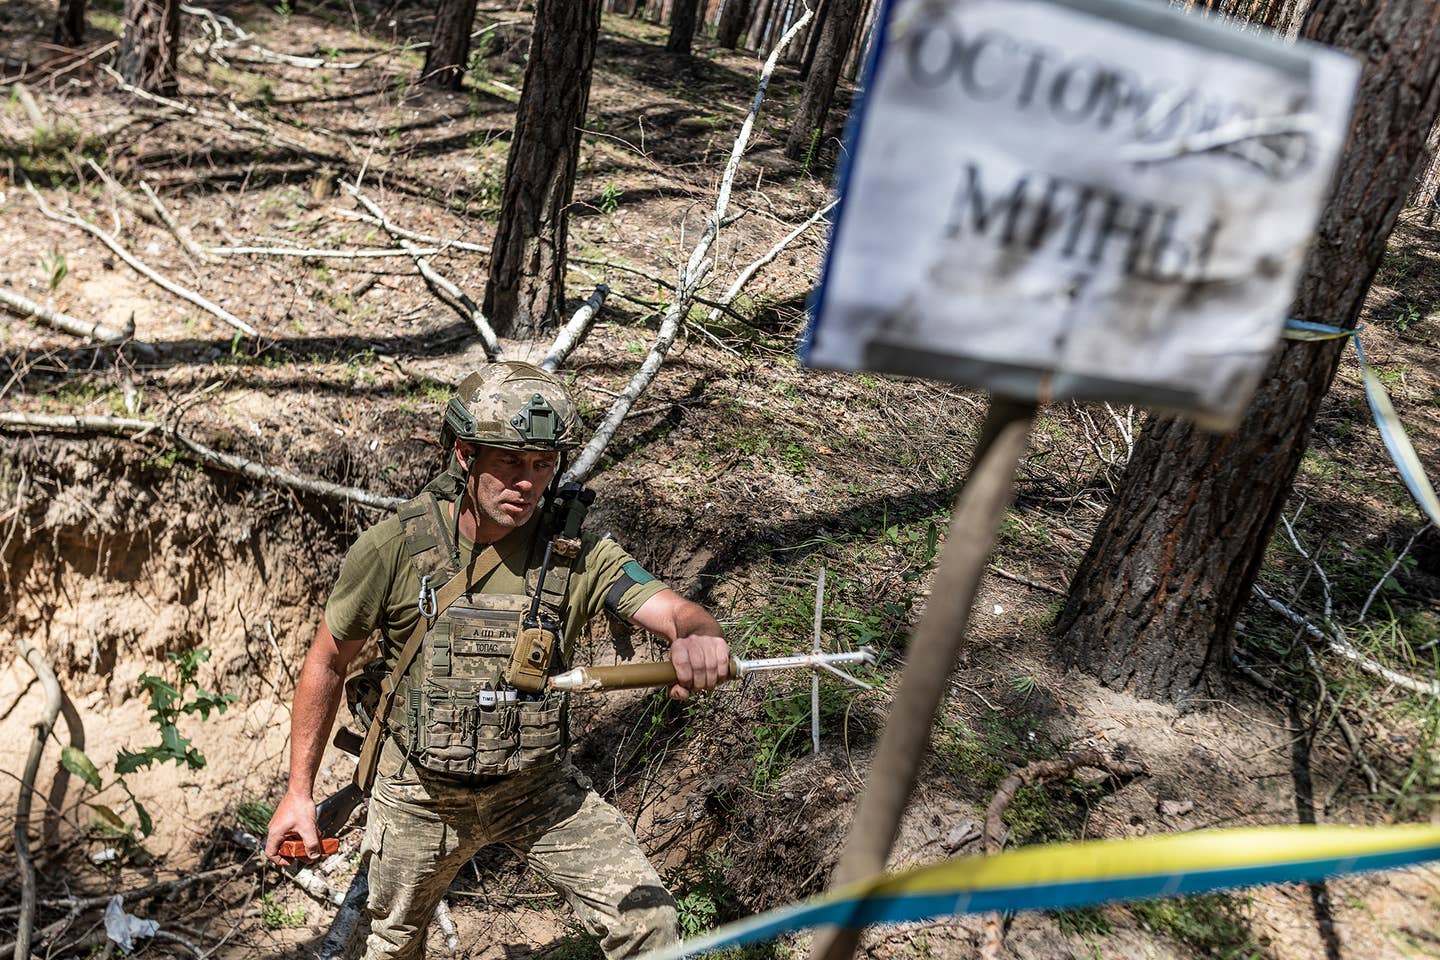 KHARKIV, UKRAINE - JULY 17: A Ukrainian soldier works on demining in forested land of Kharkiv Oblast, Ukraine on July 17, 2023. (Photo by Diego Herrera Carcedo/Anadolu Agency via Getty Images)